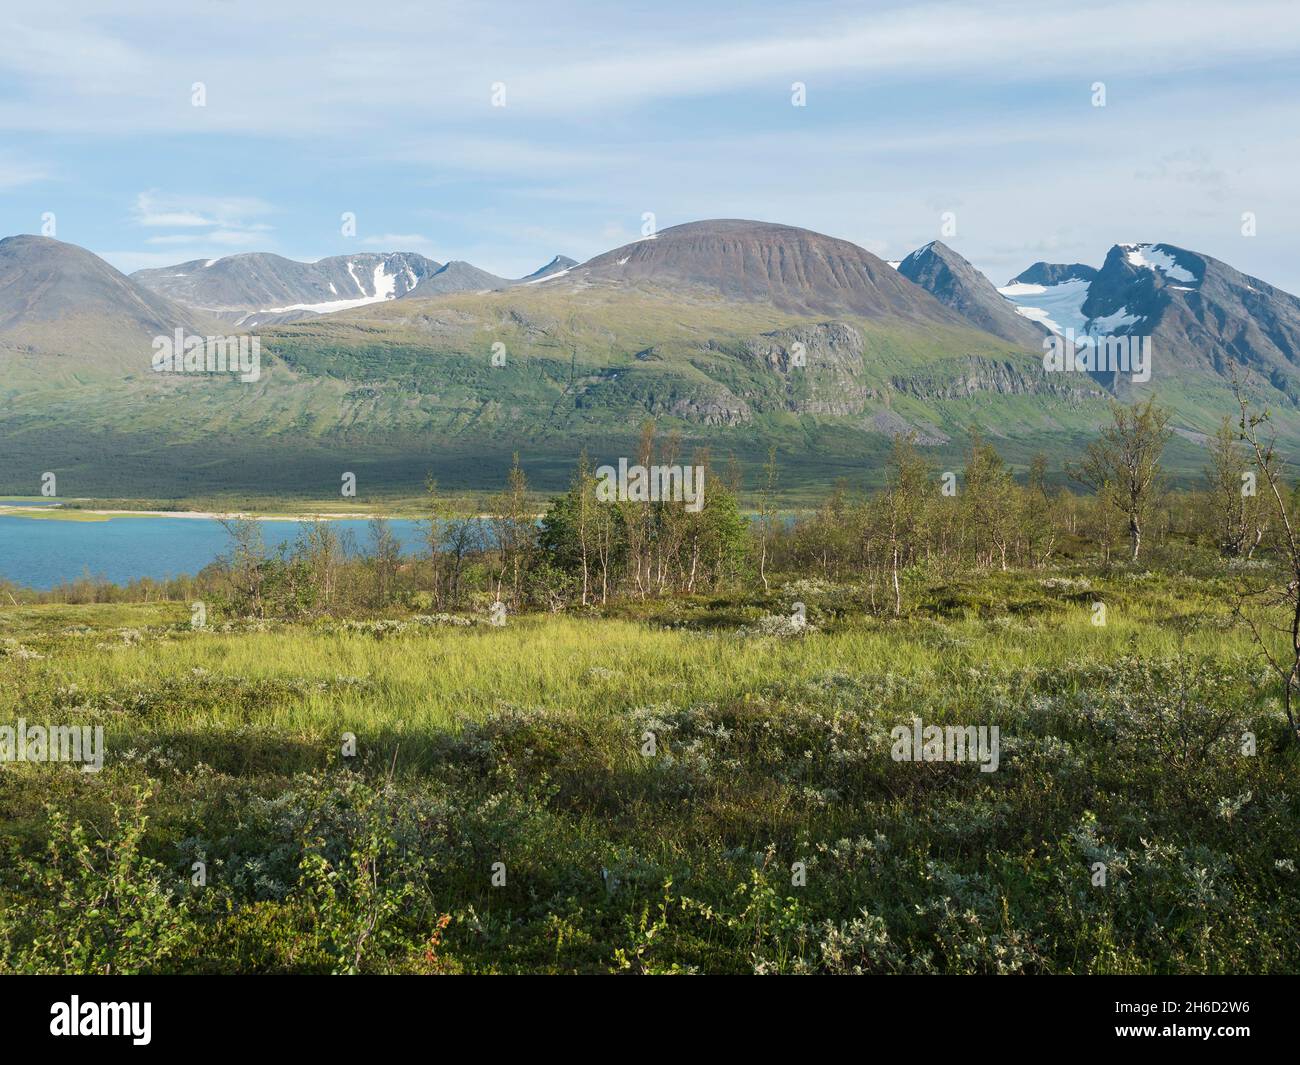 Abedul a orillas del lago Akkajaure con Akka, macizo de montaña Ahkka con nieve y glaciar. Hermoso paisaje ártico del norte en Anonjalmme saami Foto de stock